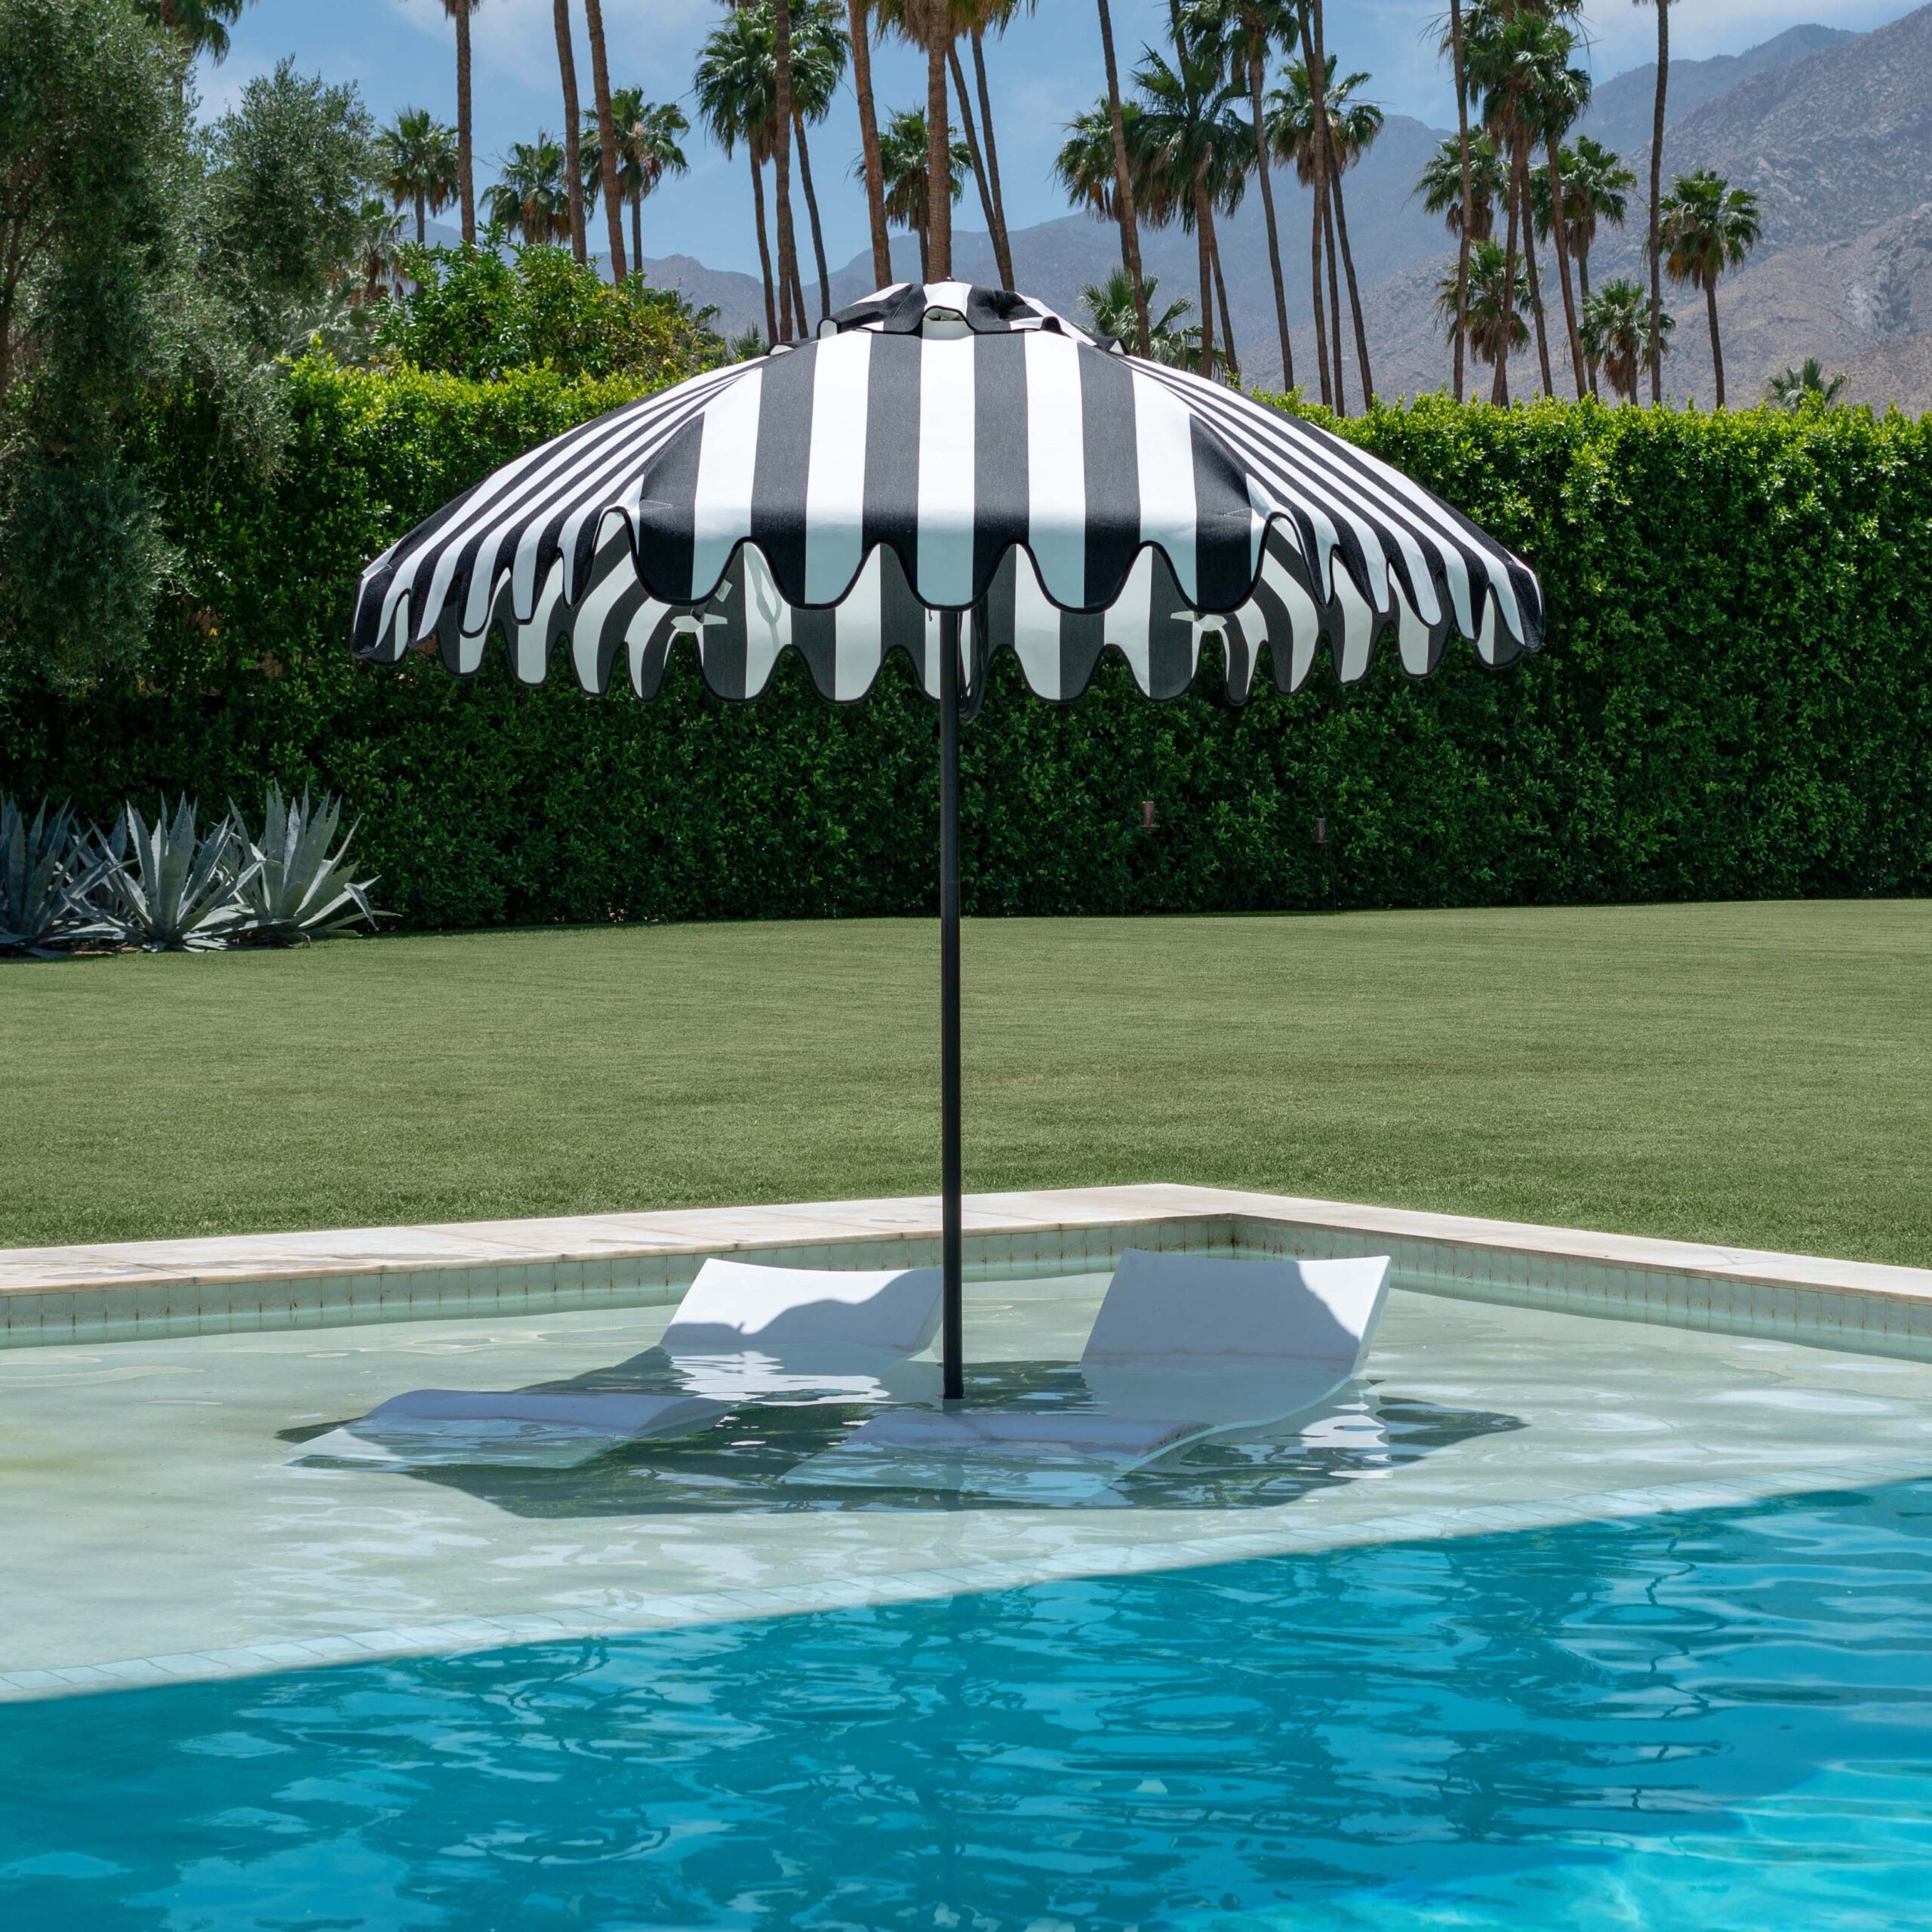 Image of umbrella in pool